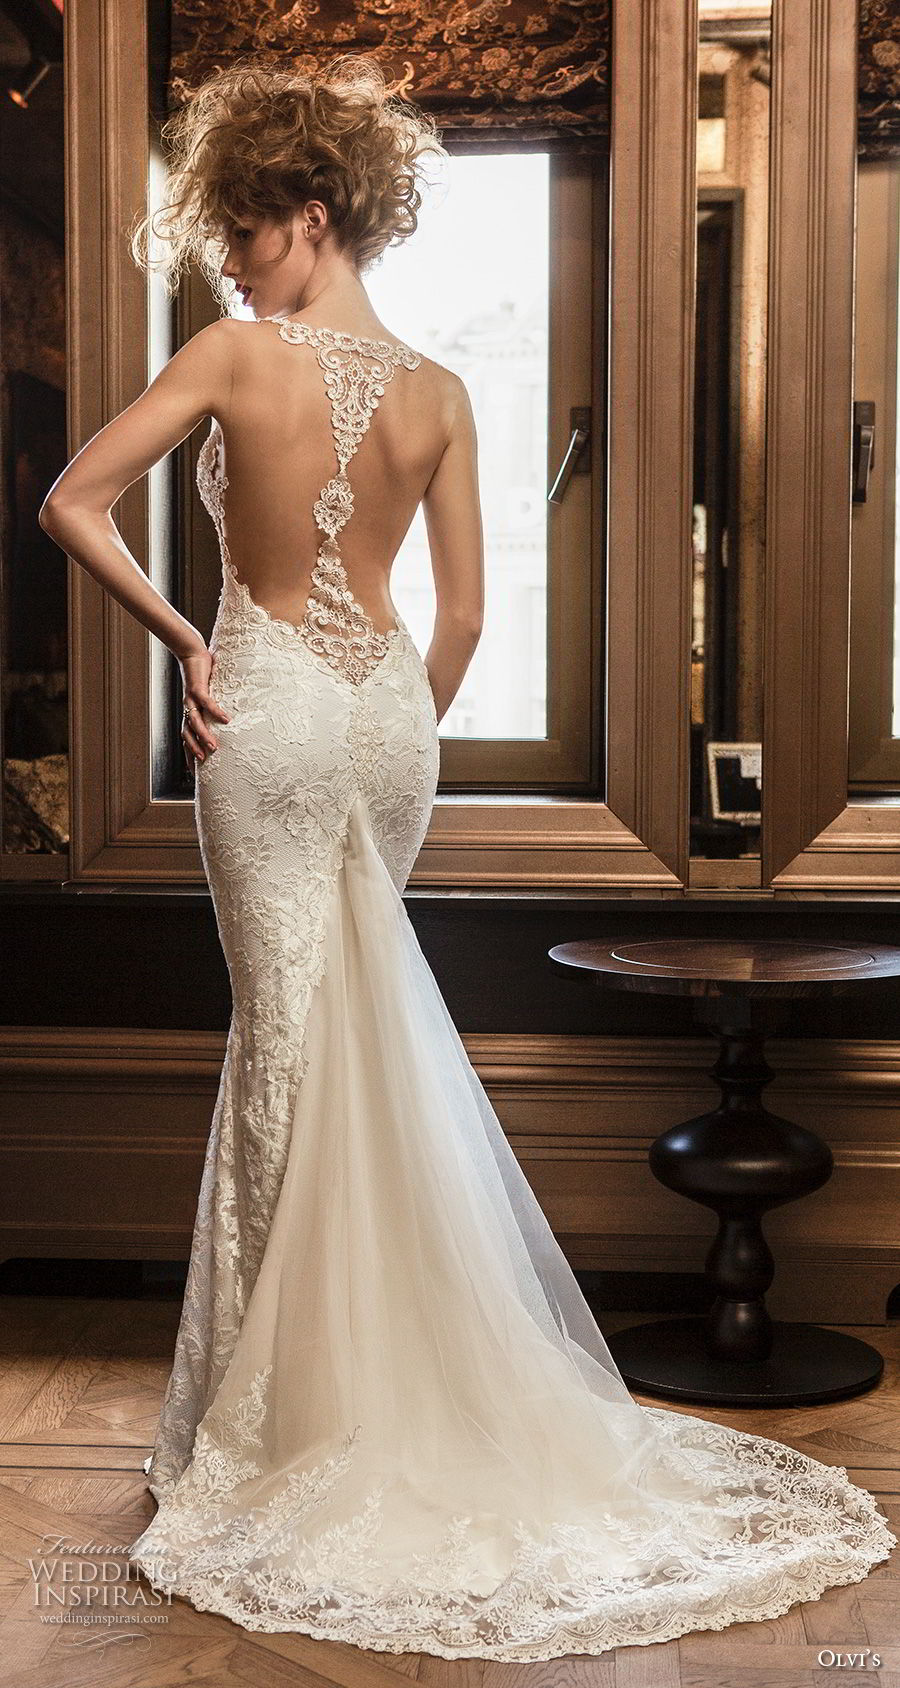 olvi 2019 bridal sleeveless with strap sweetheart neckline full embellishment elegant fit and flare wedding dress chapel train (13) bv